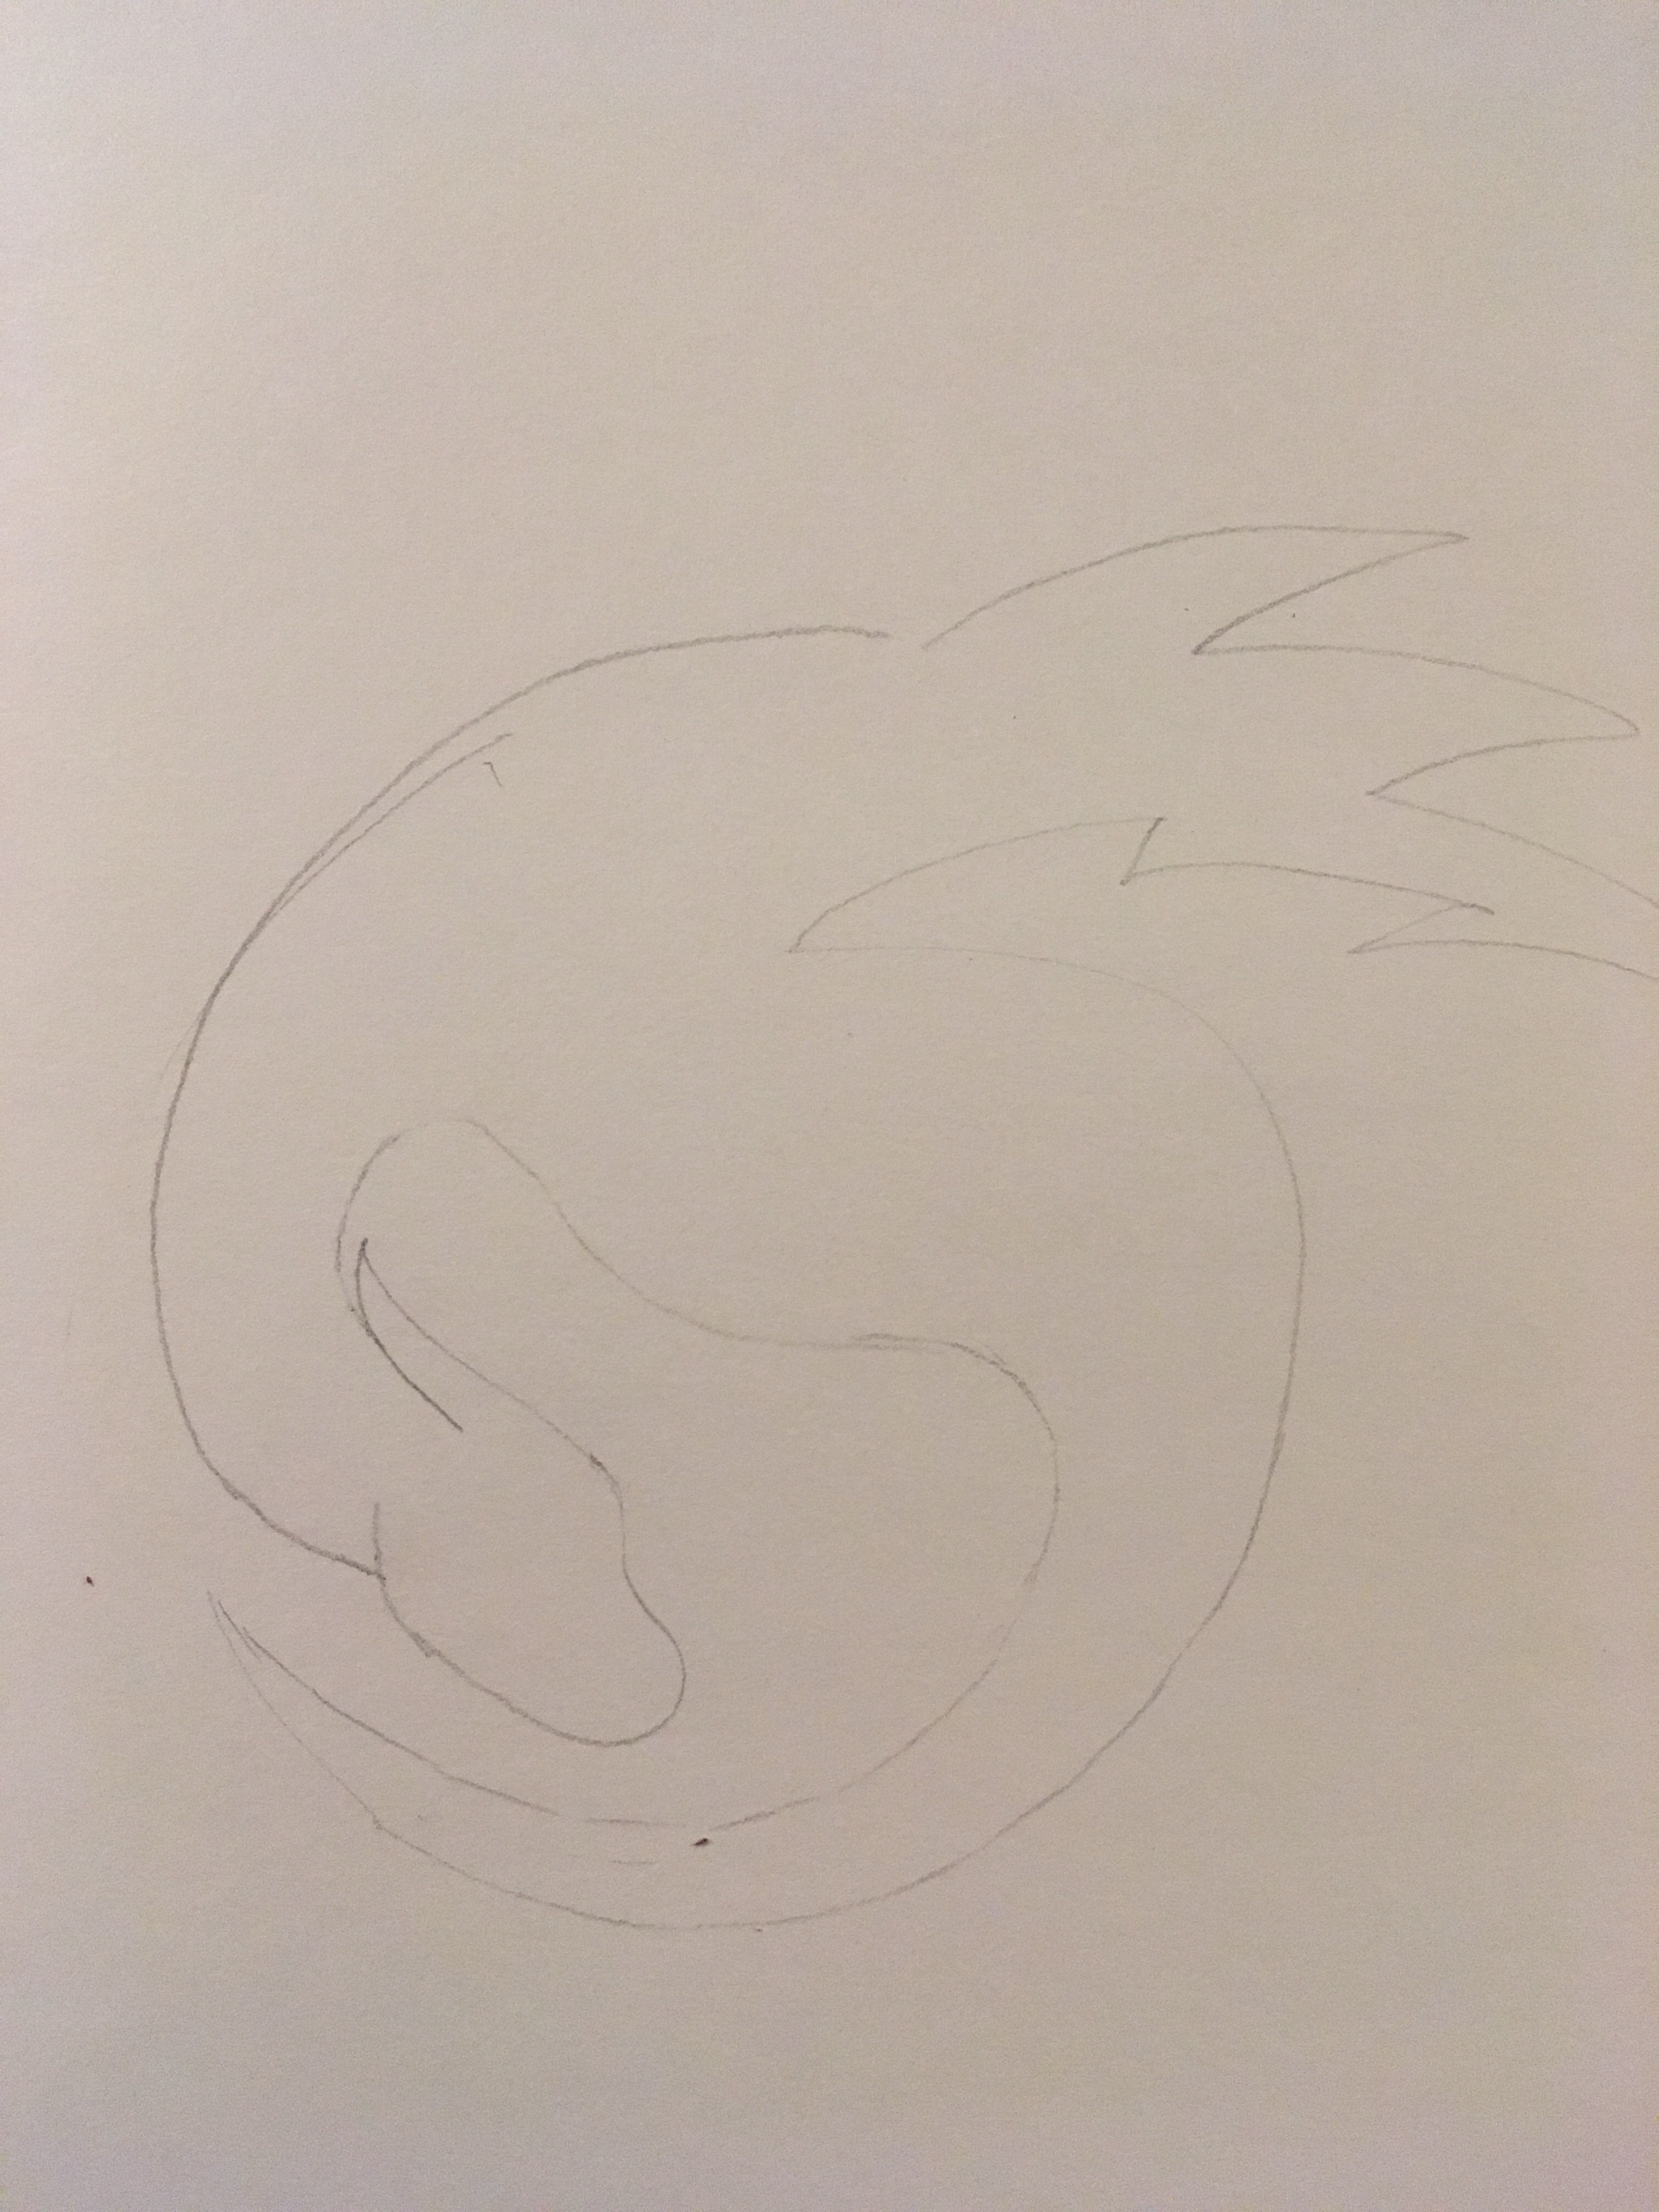 Dragon in pencil circling around